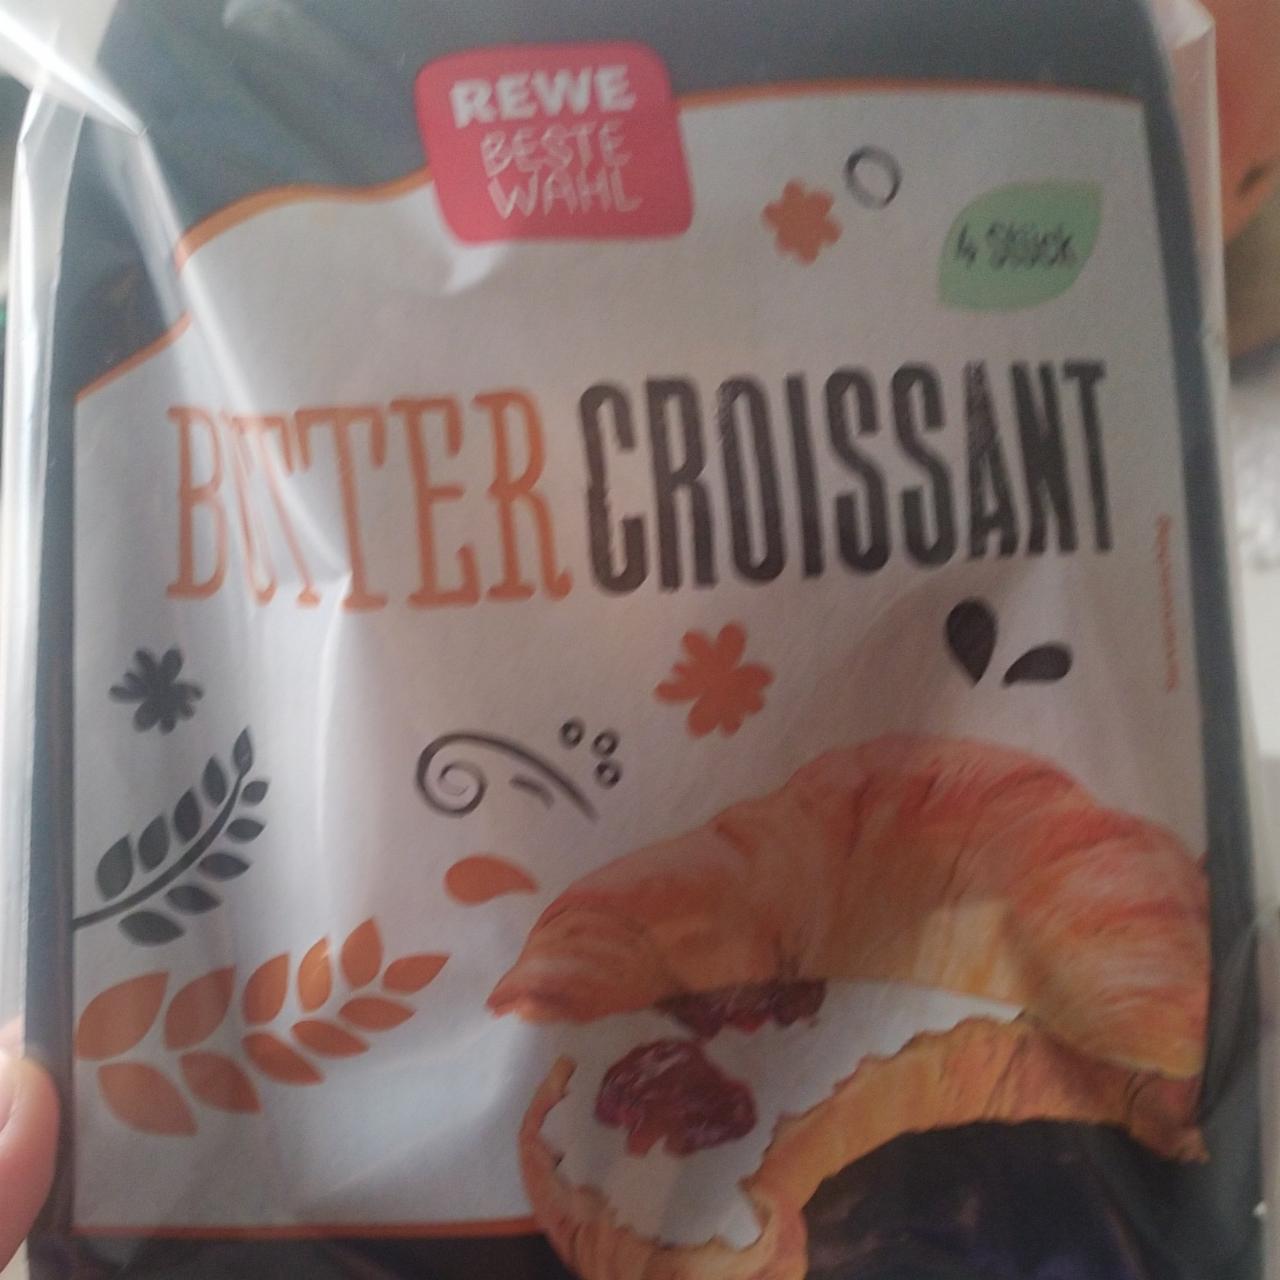 Zdjęcia - Butter croissant Rewe